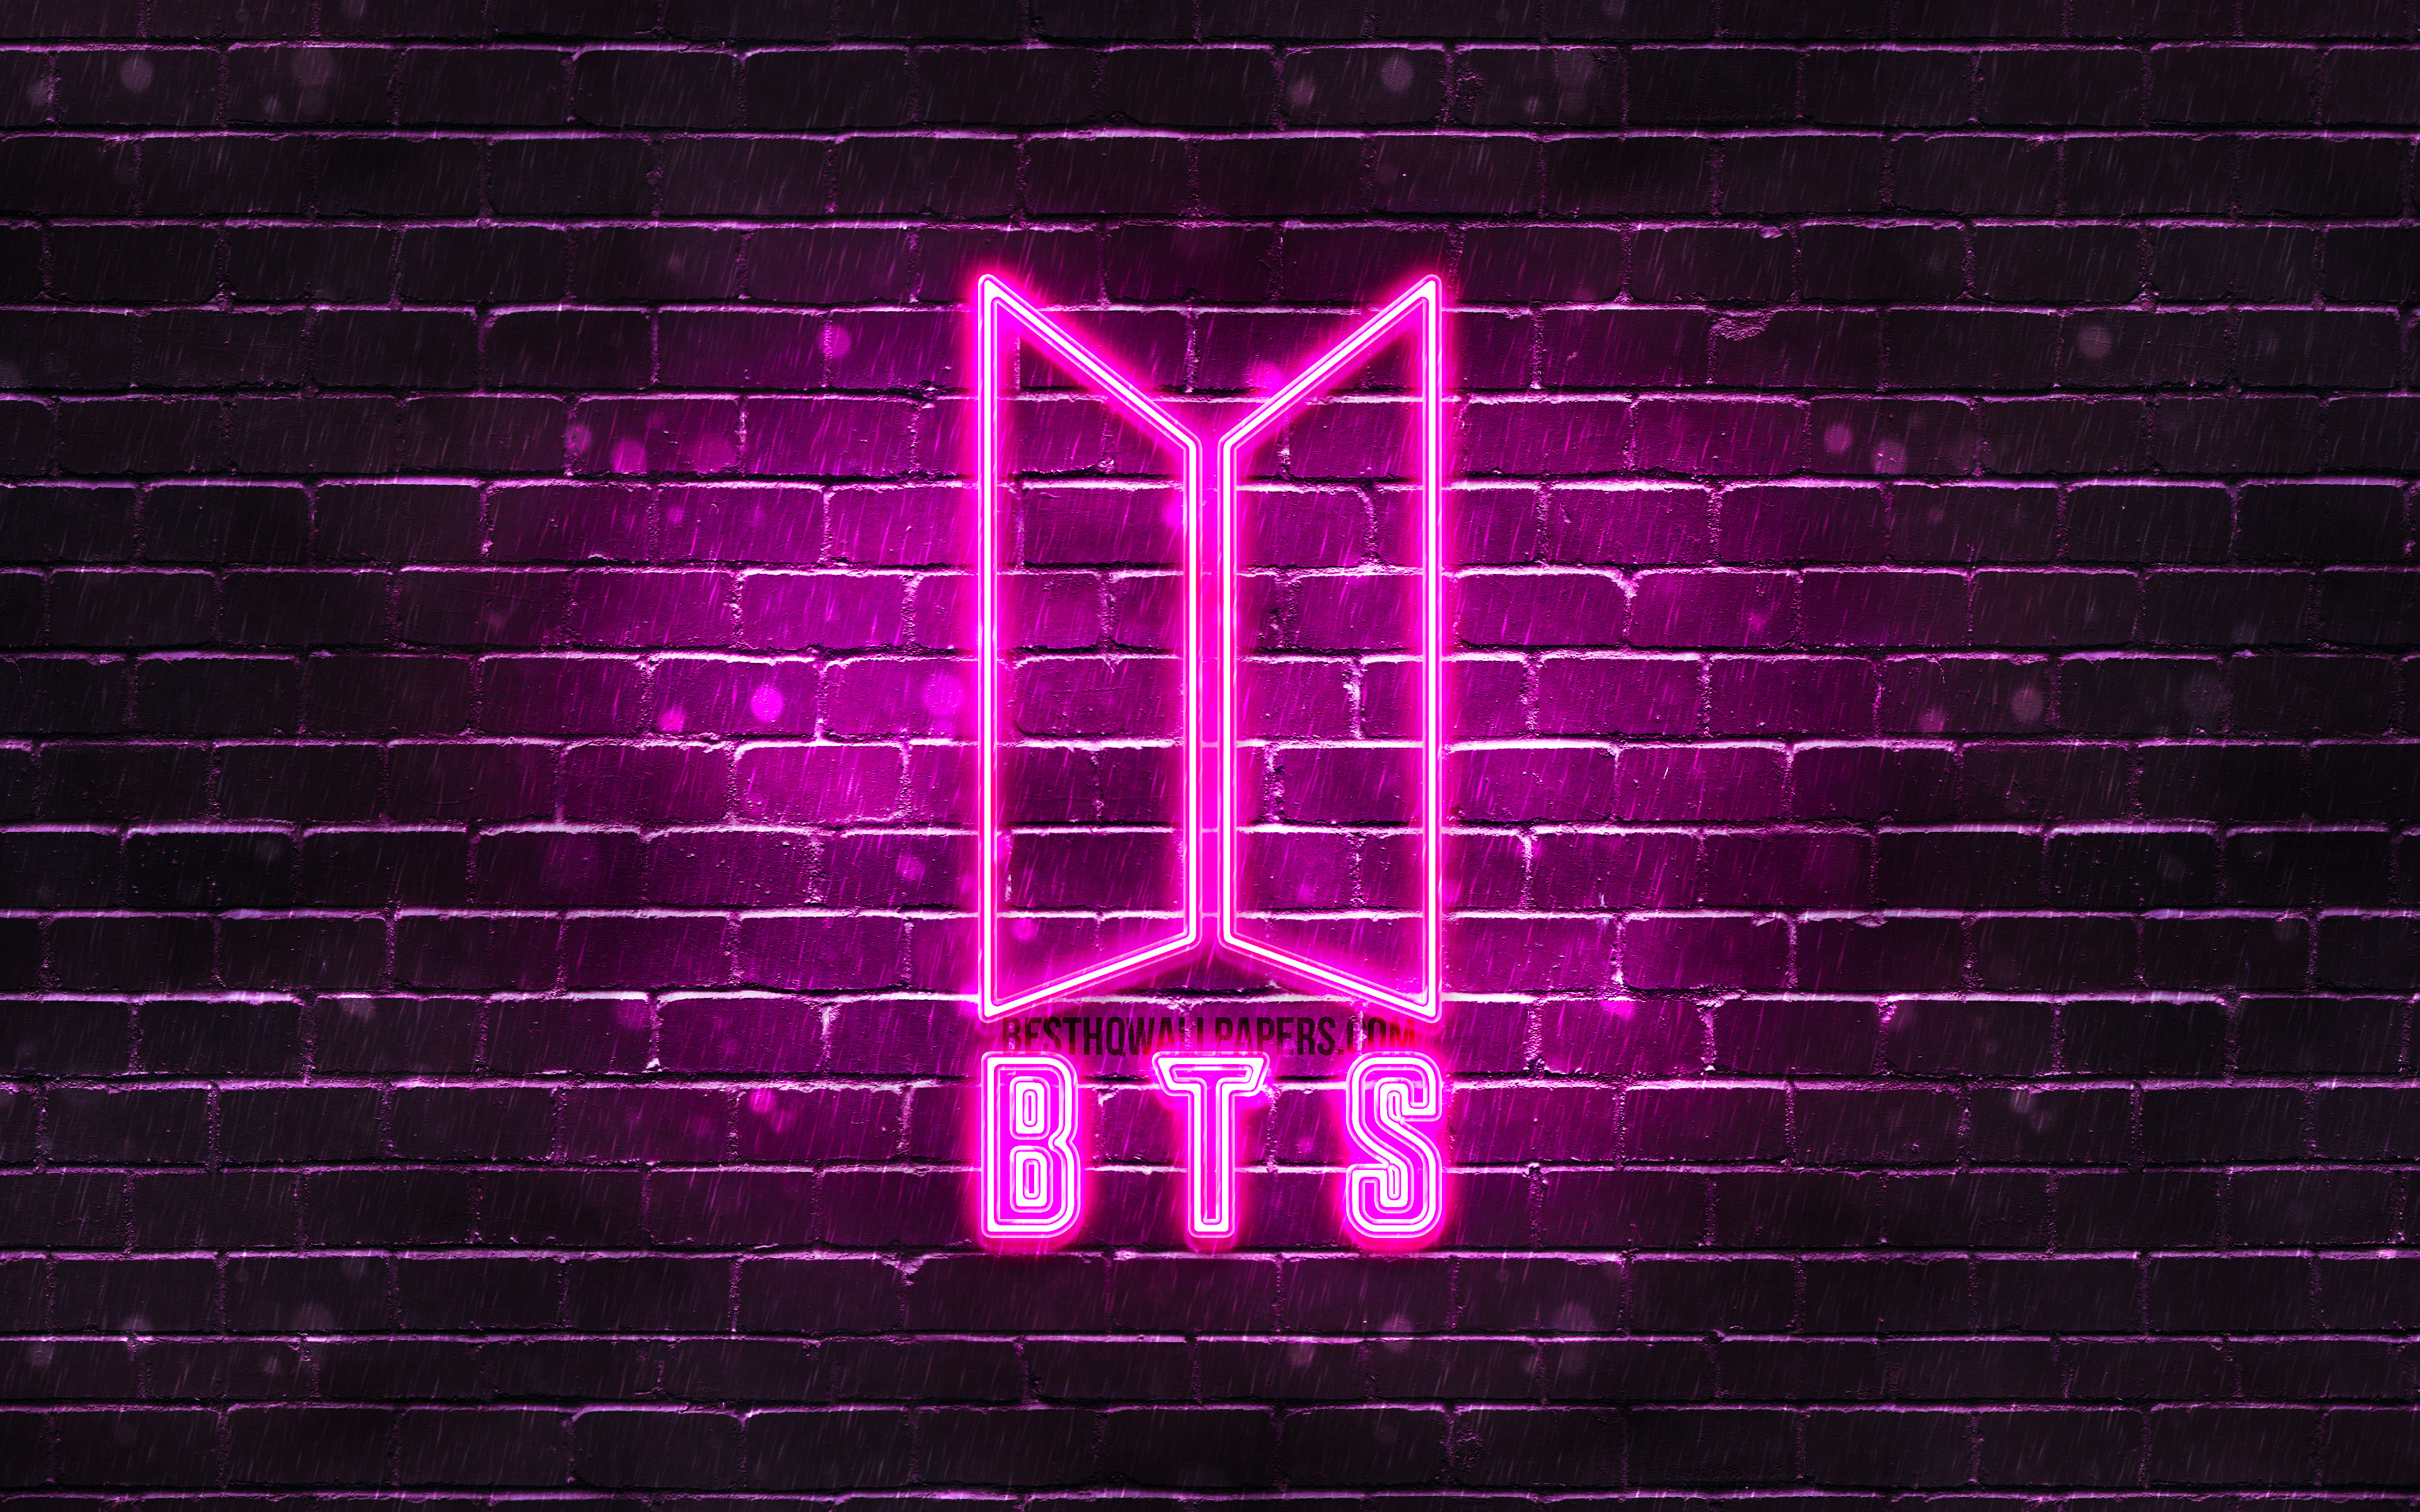 Download wallpaper BTS purple logo, 4k, Bangtan Boys, purple brickwall, BTS logo, korean band, BTS neon logo, BTS for desktop with resolution 3840x2400. High Quality HD picture wallpaper